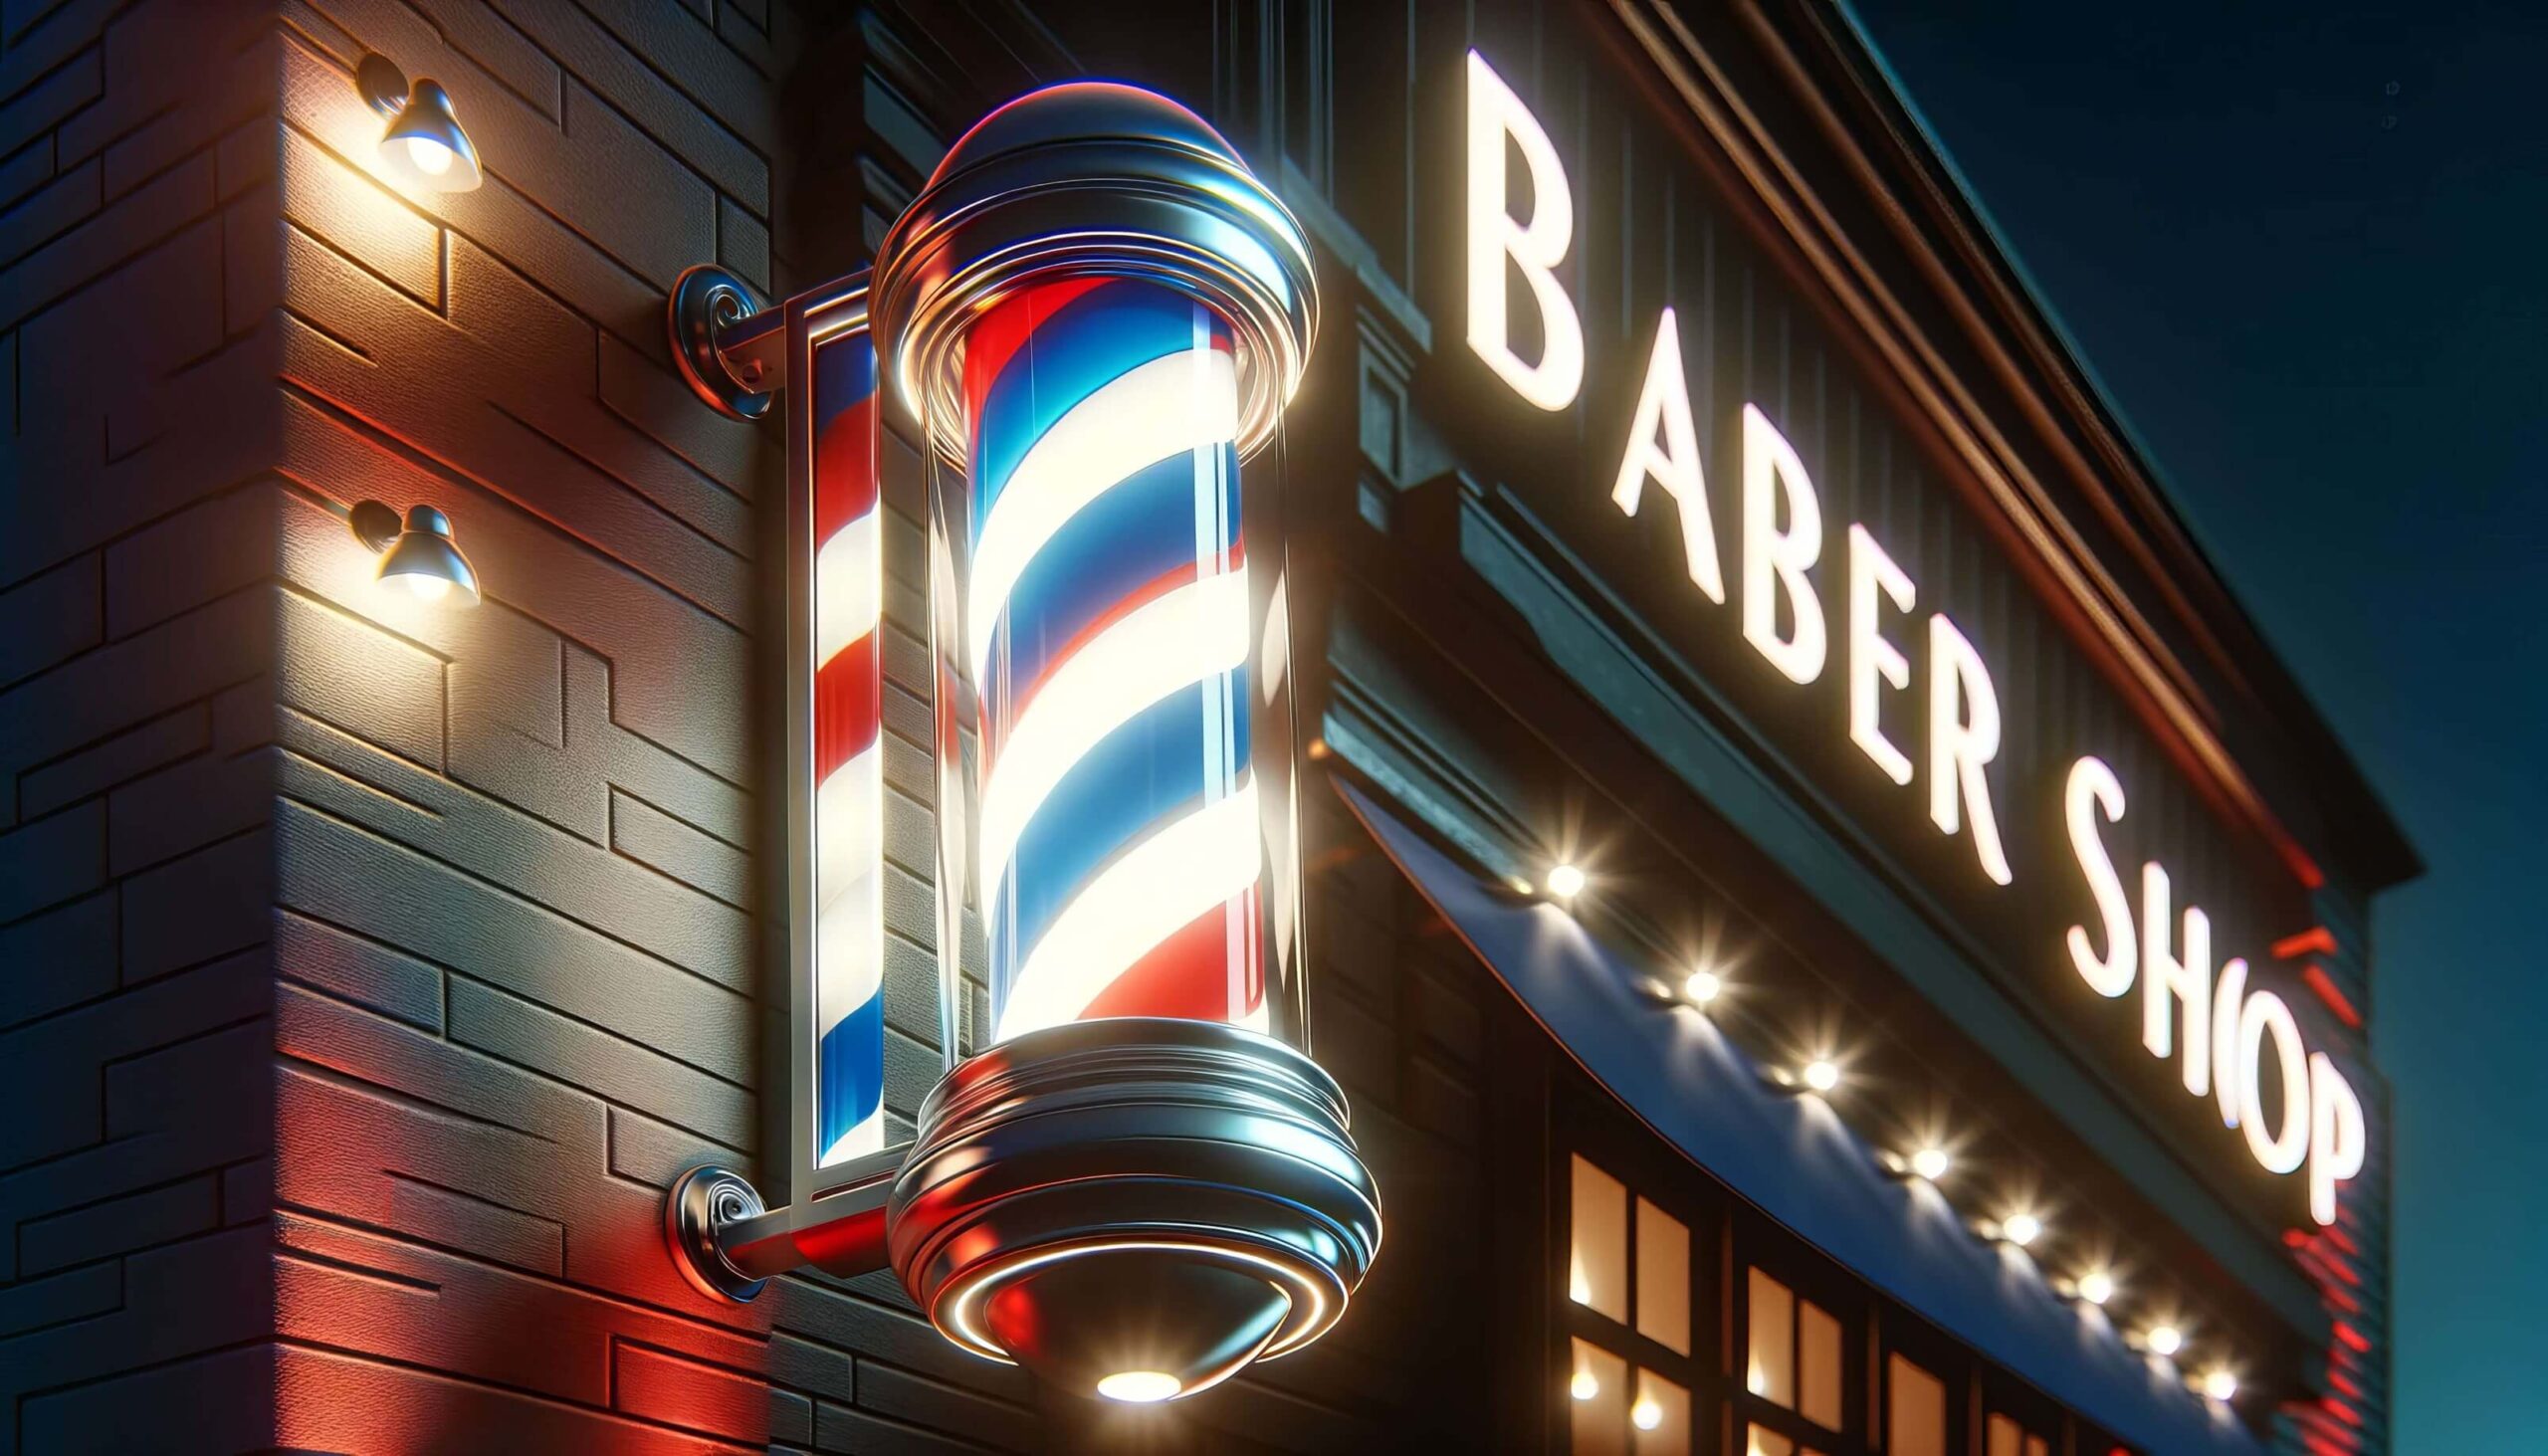 Barber Pole: Technical Aspects